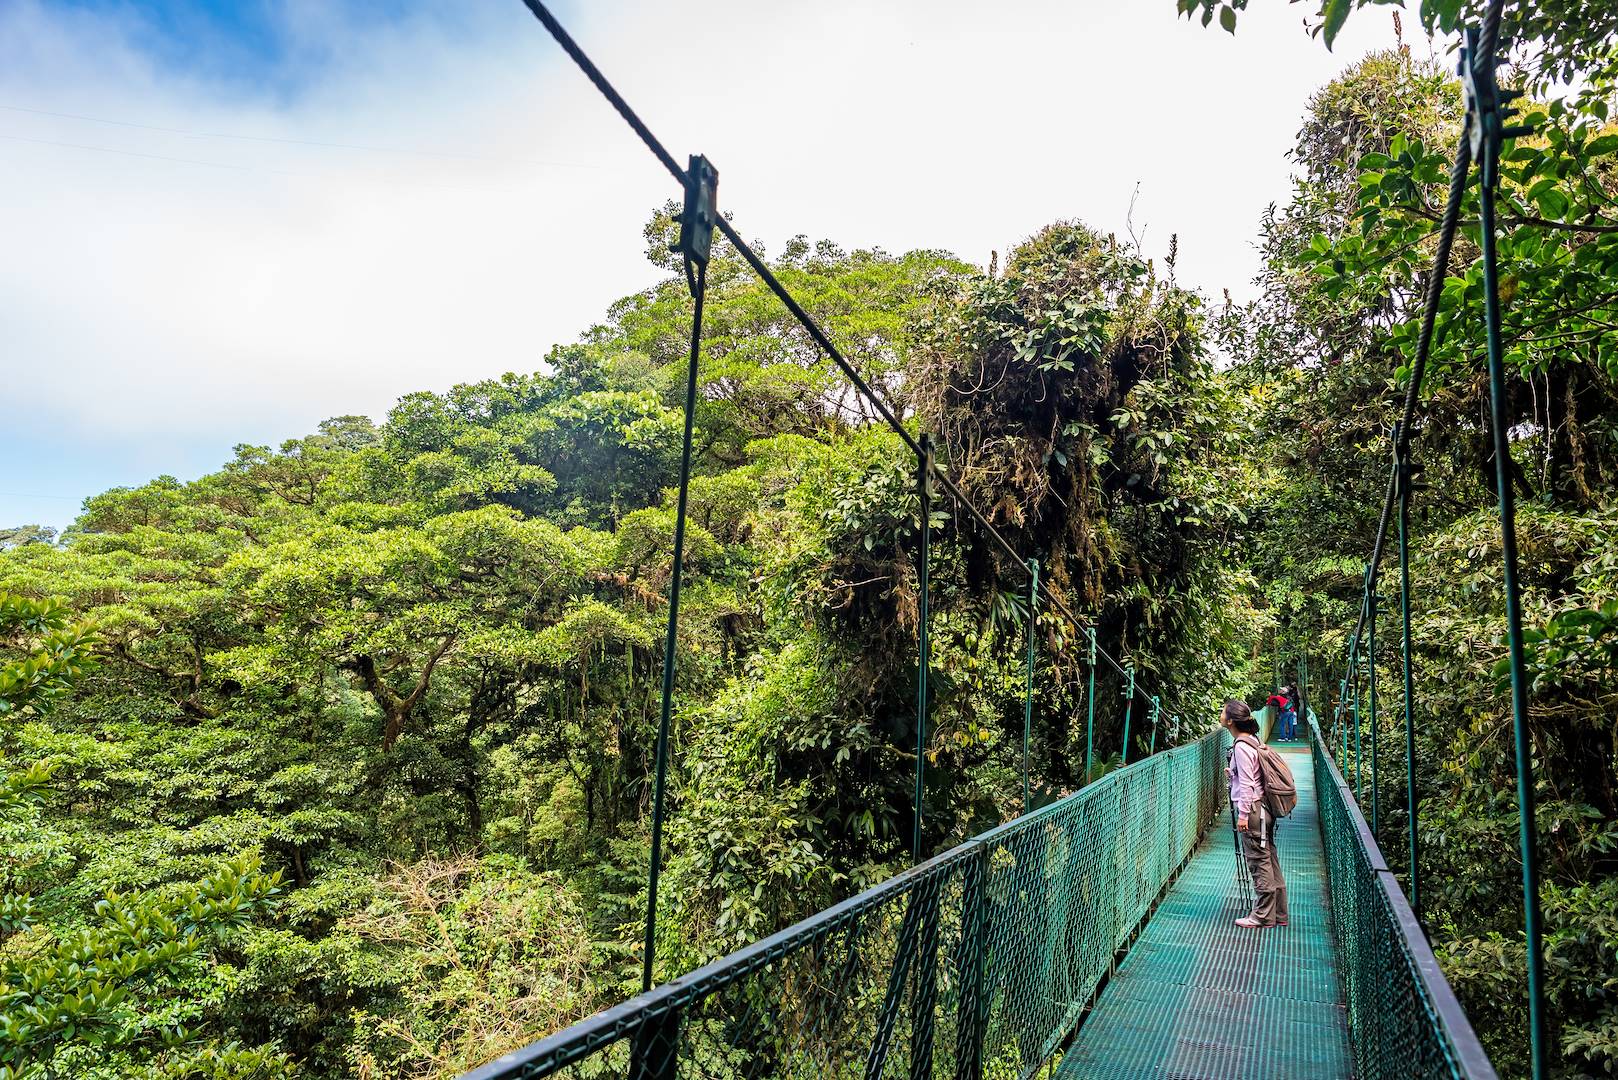  Passerelles de la canopée - Monteverde - Costa Rica